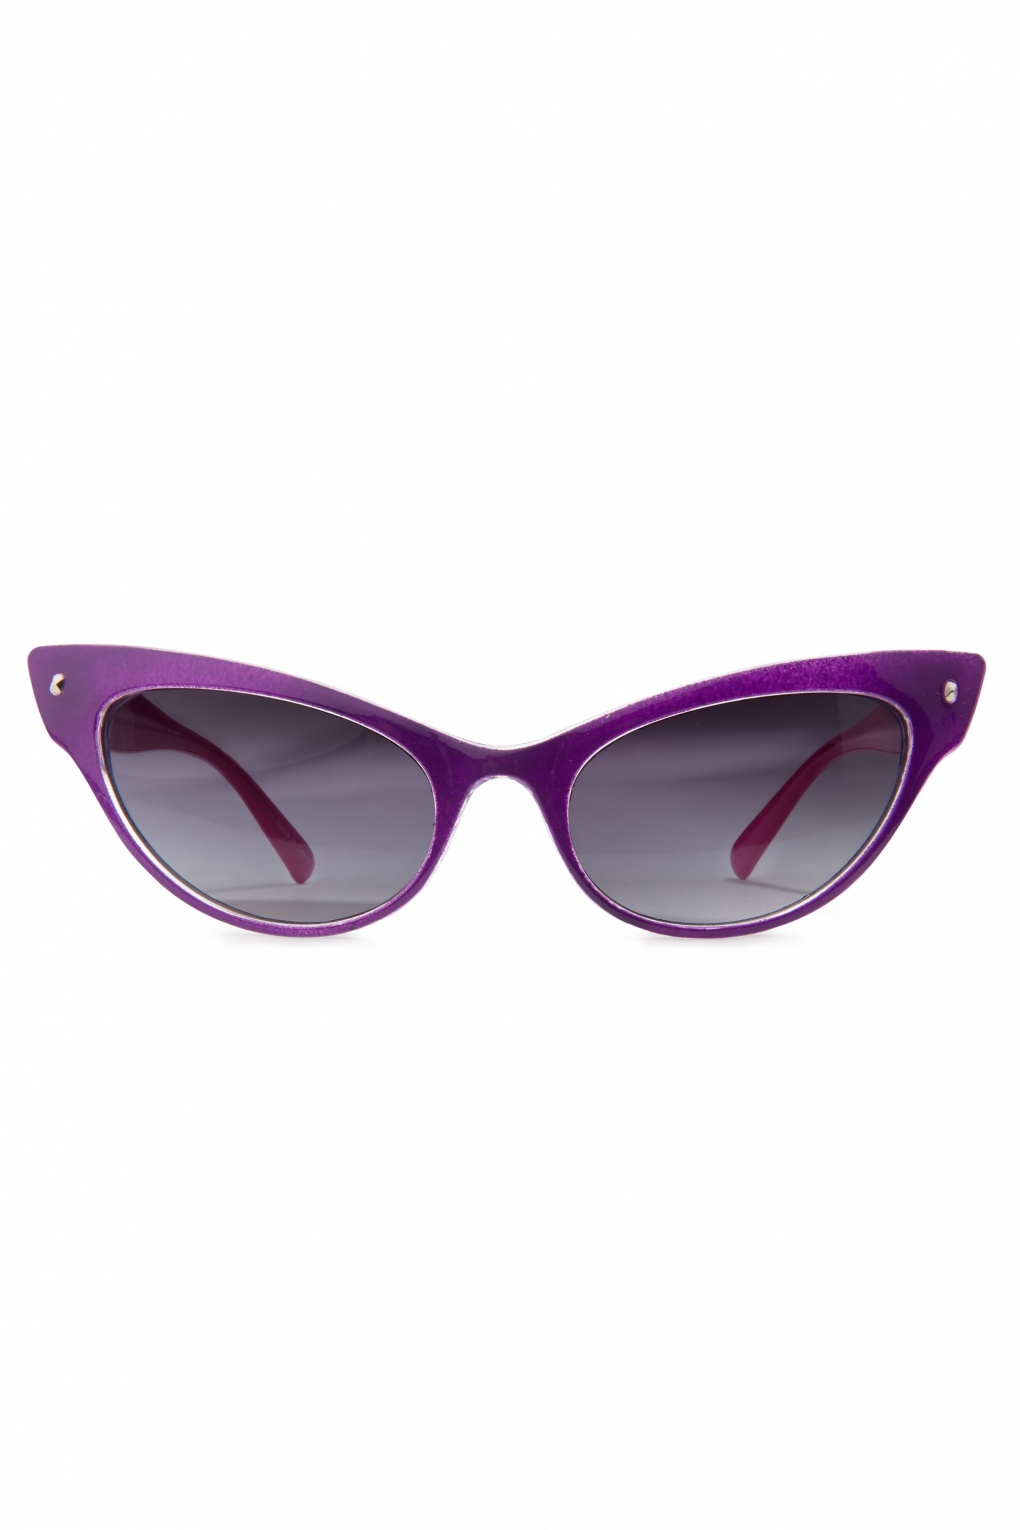 50s Venice Beach Cat Eye Glasses Purple